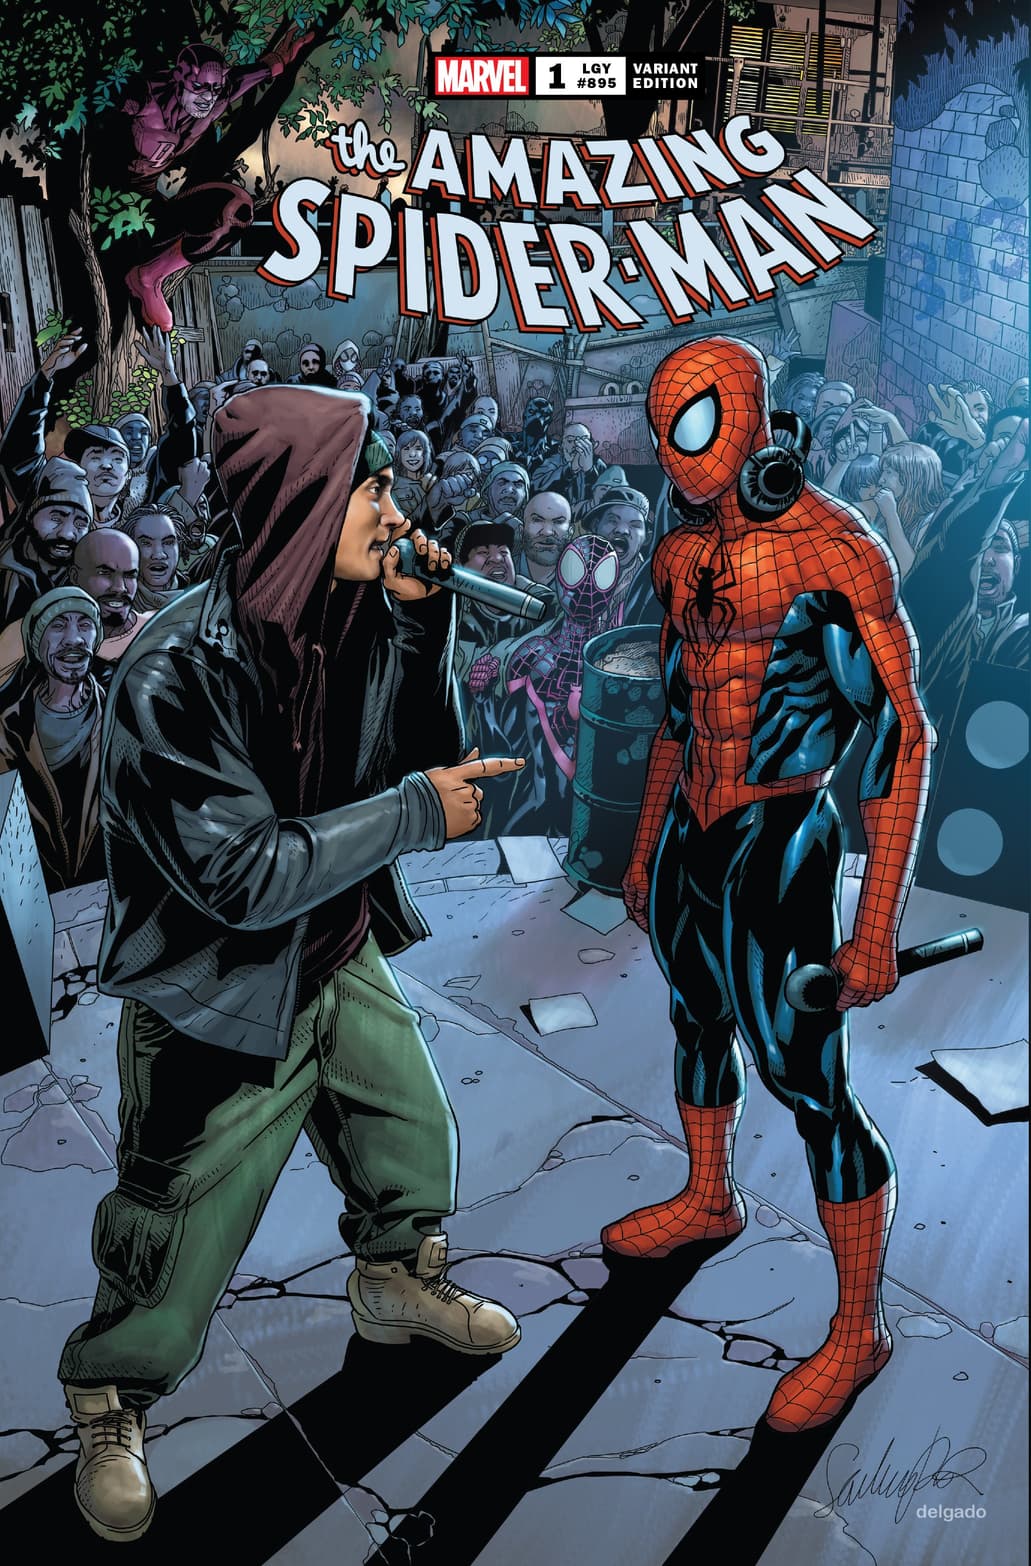 eminem-spider-man-portada-comic-marvel-amaizing-spiderman-#1-lacarteleramx